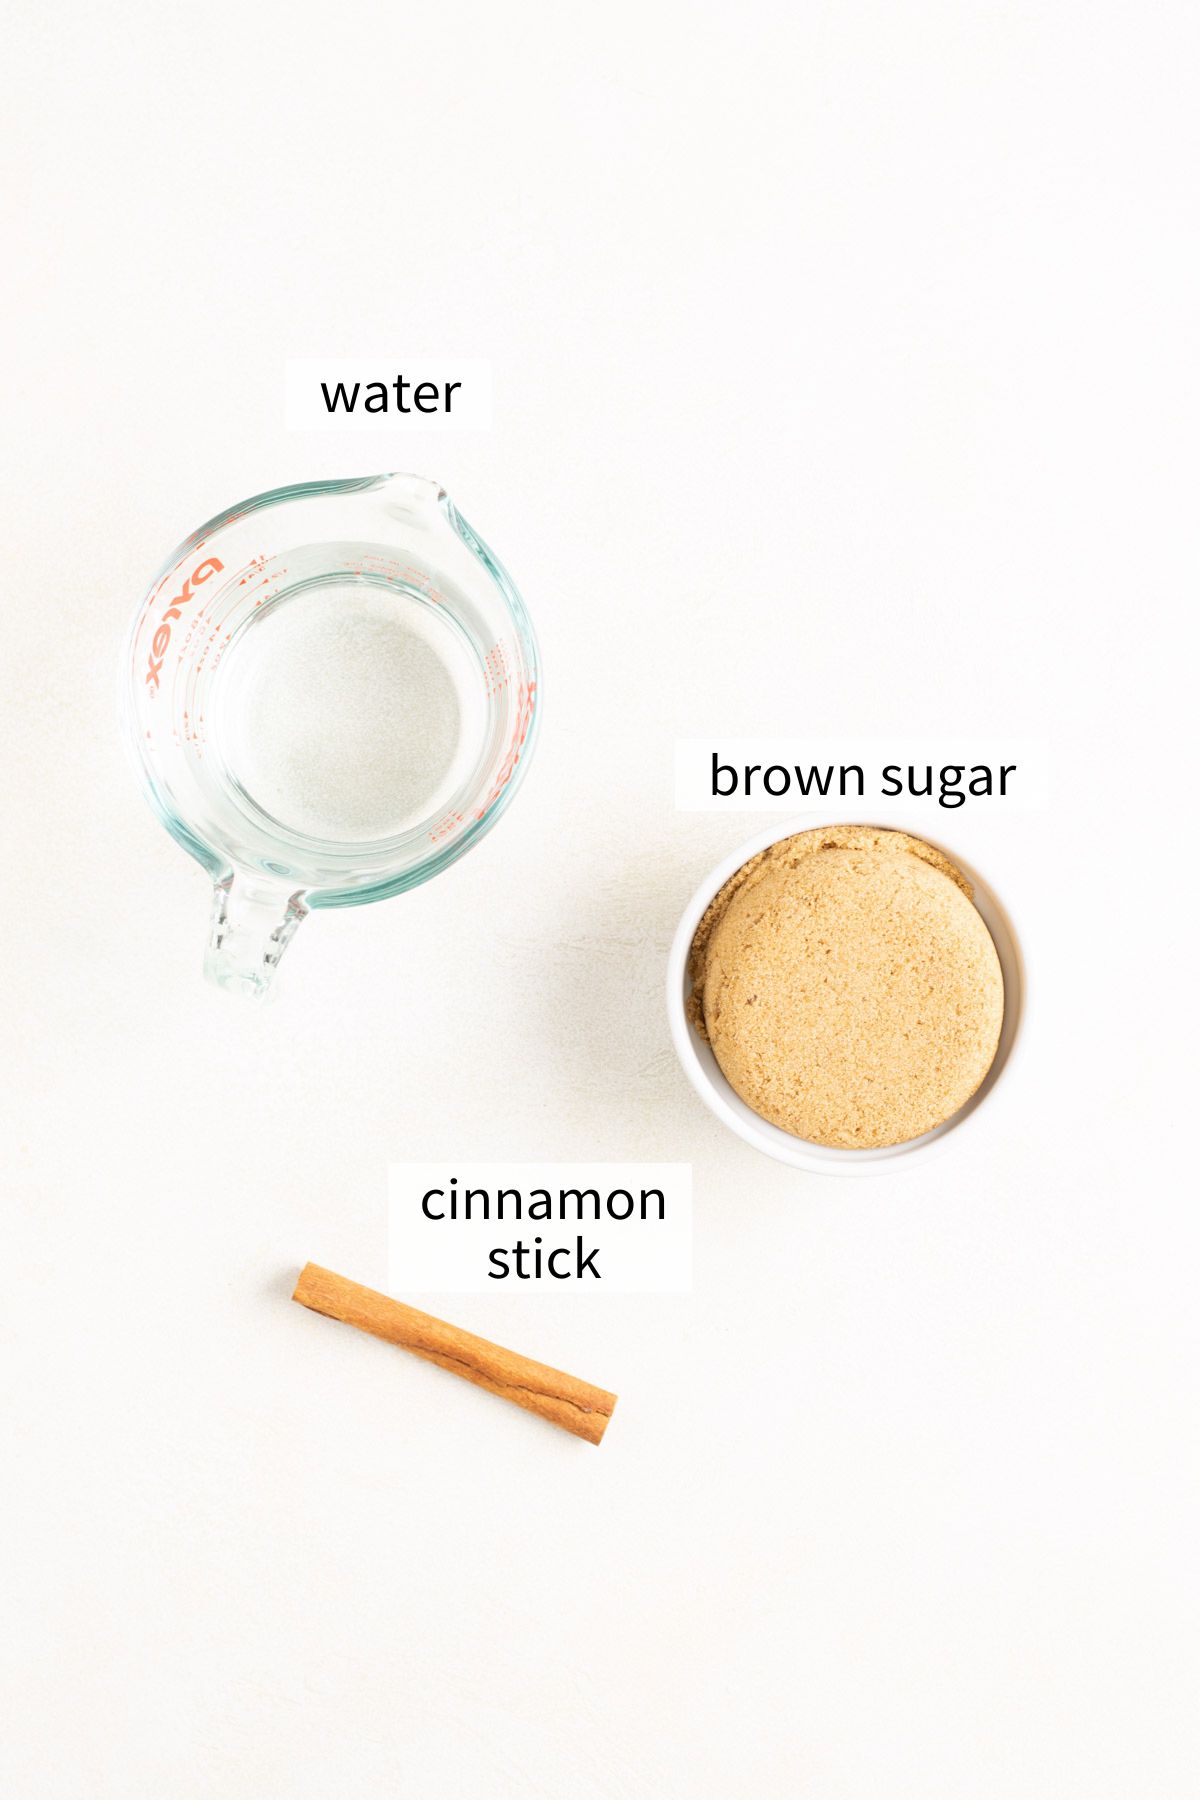 ingredients to make brown sugar syrup.